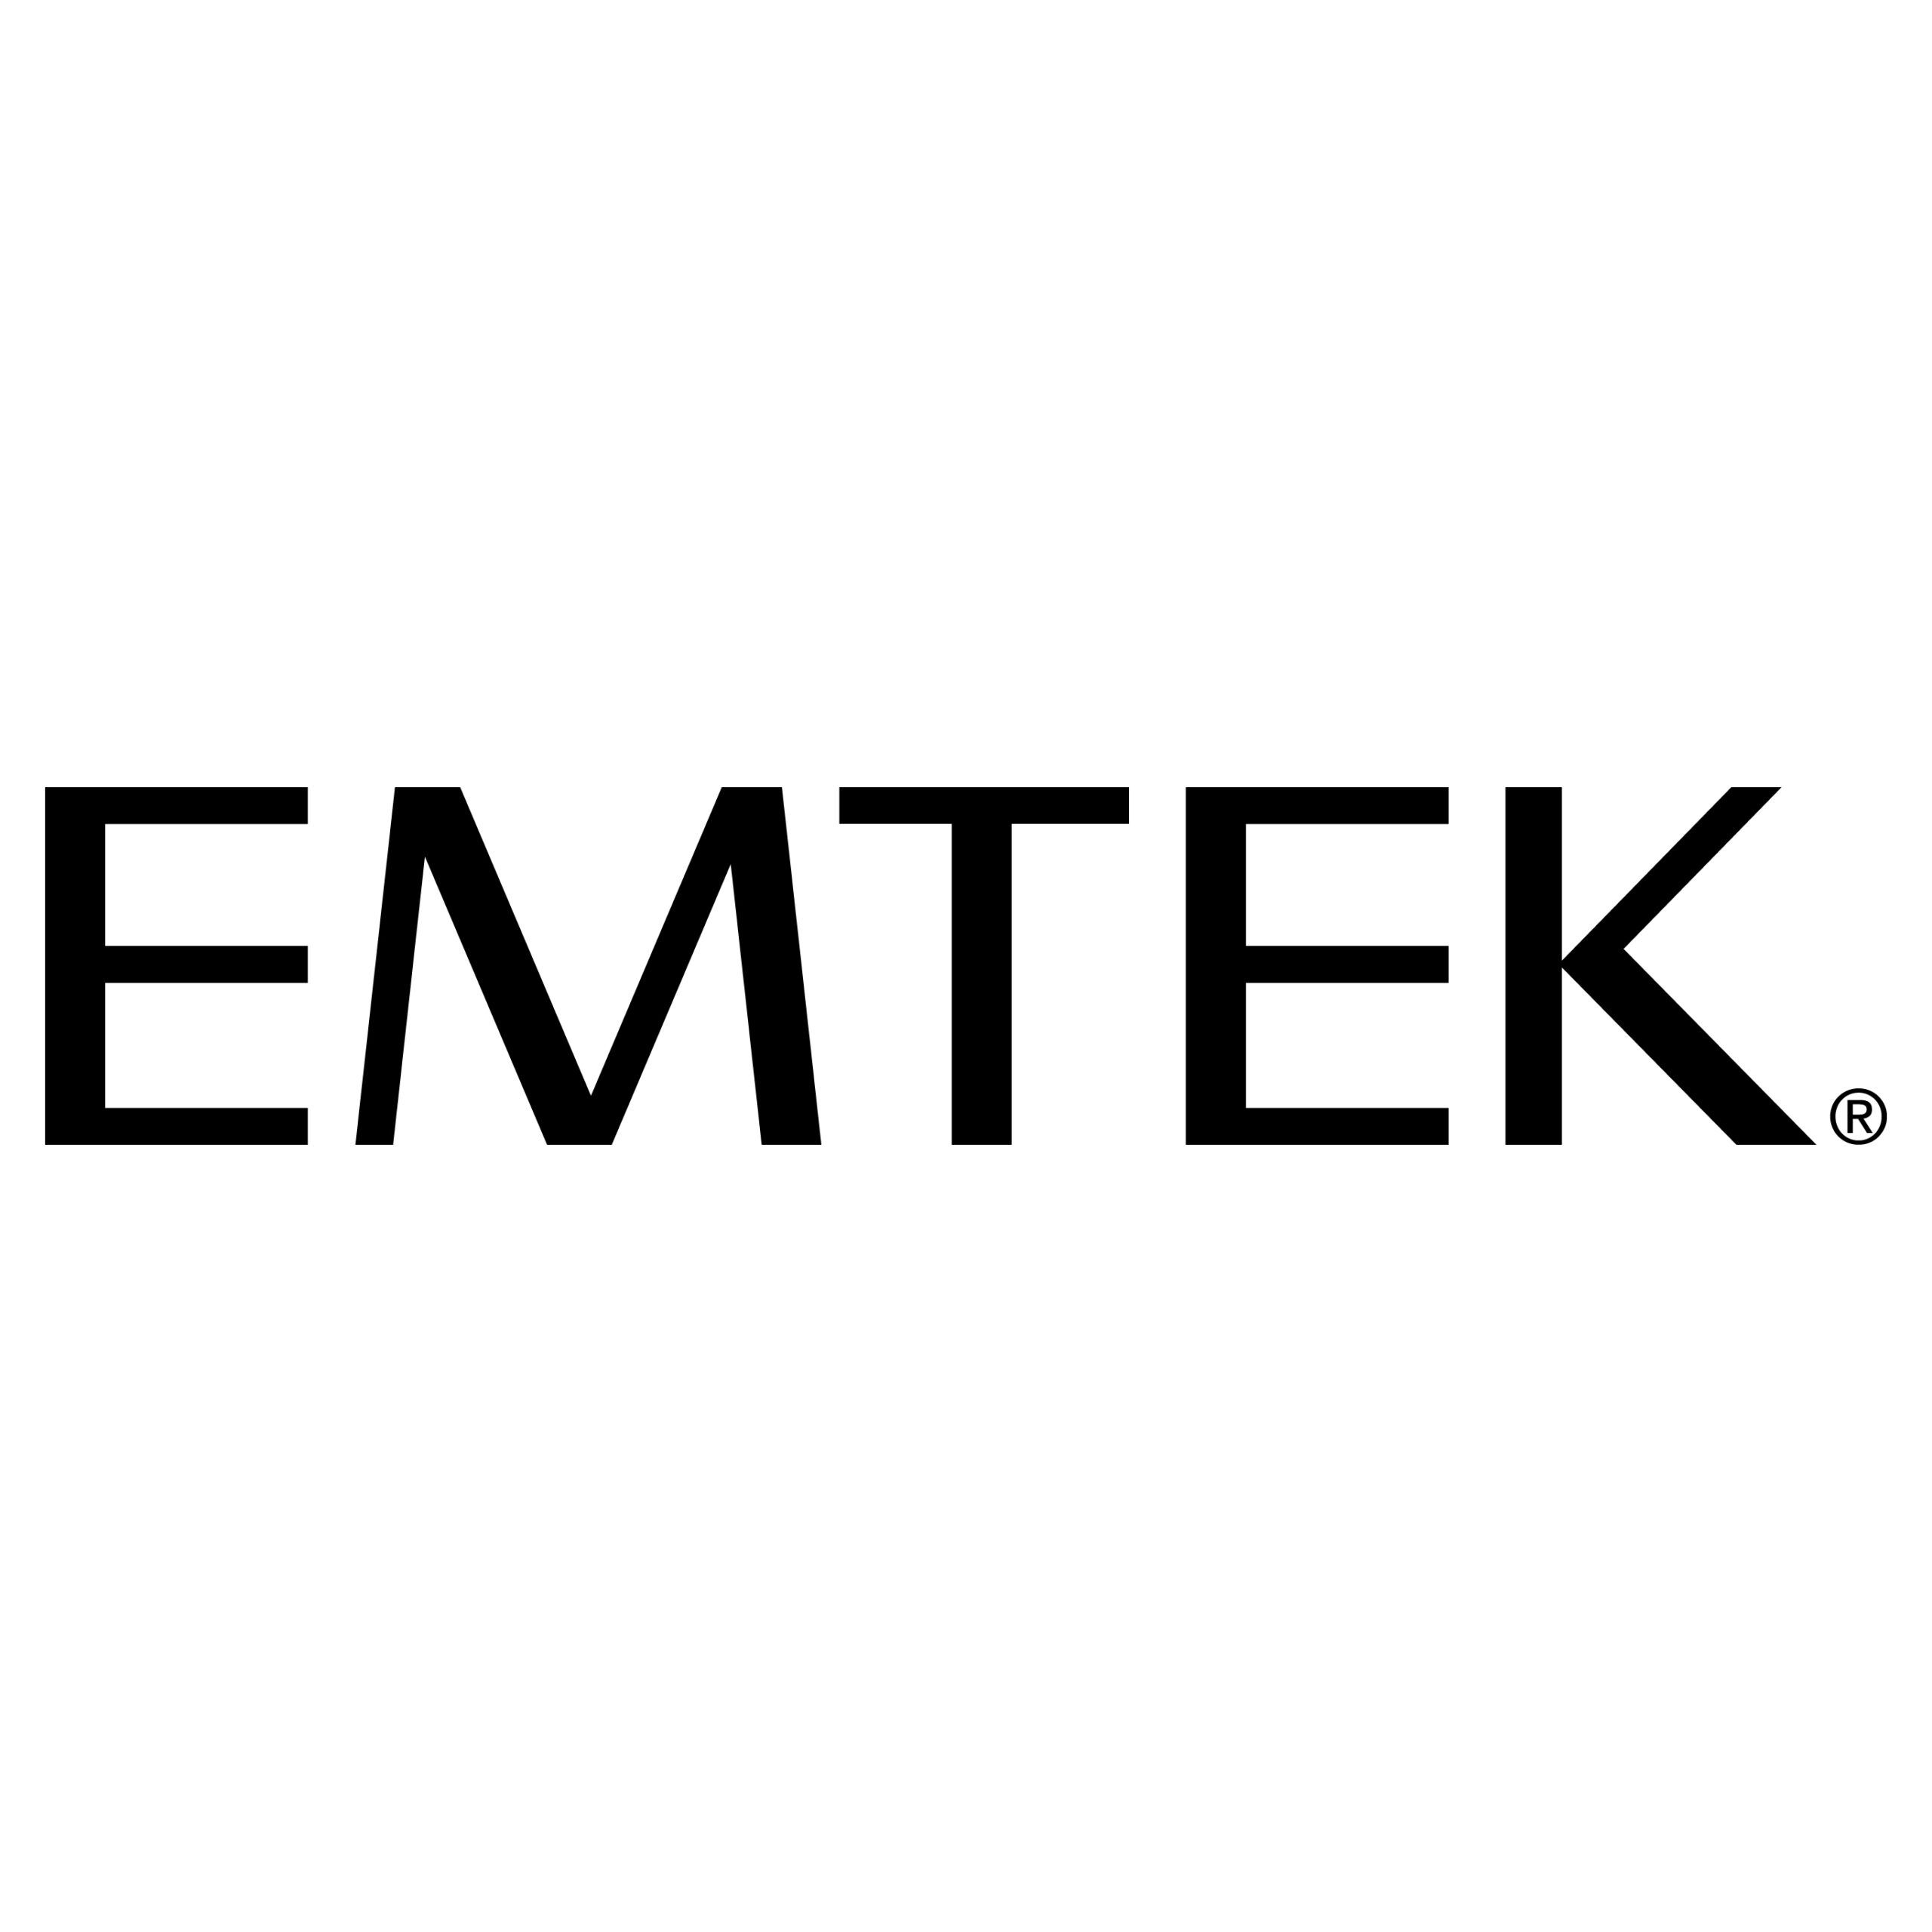 Emtek_Logo_CMYK_Black_Rmark__1_